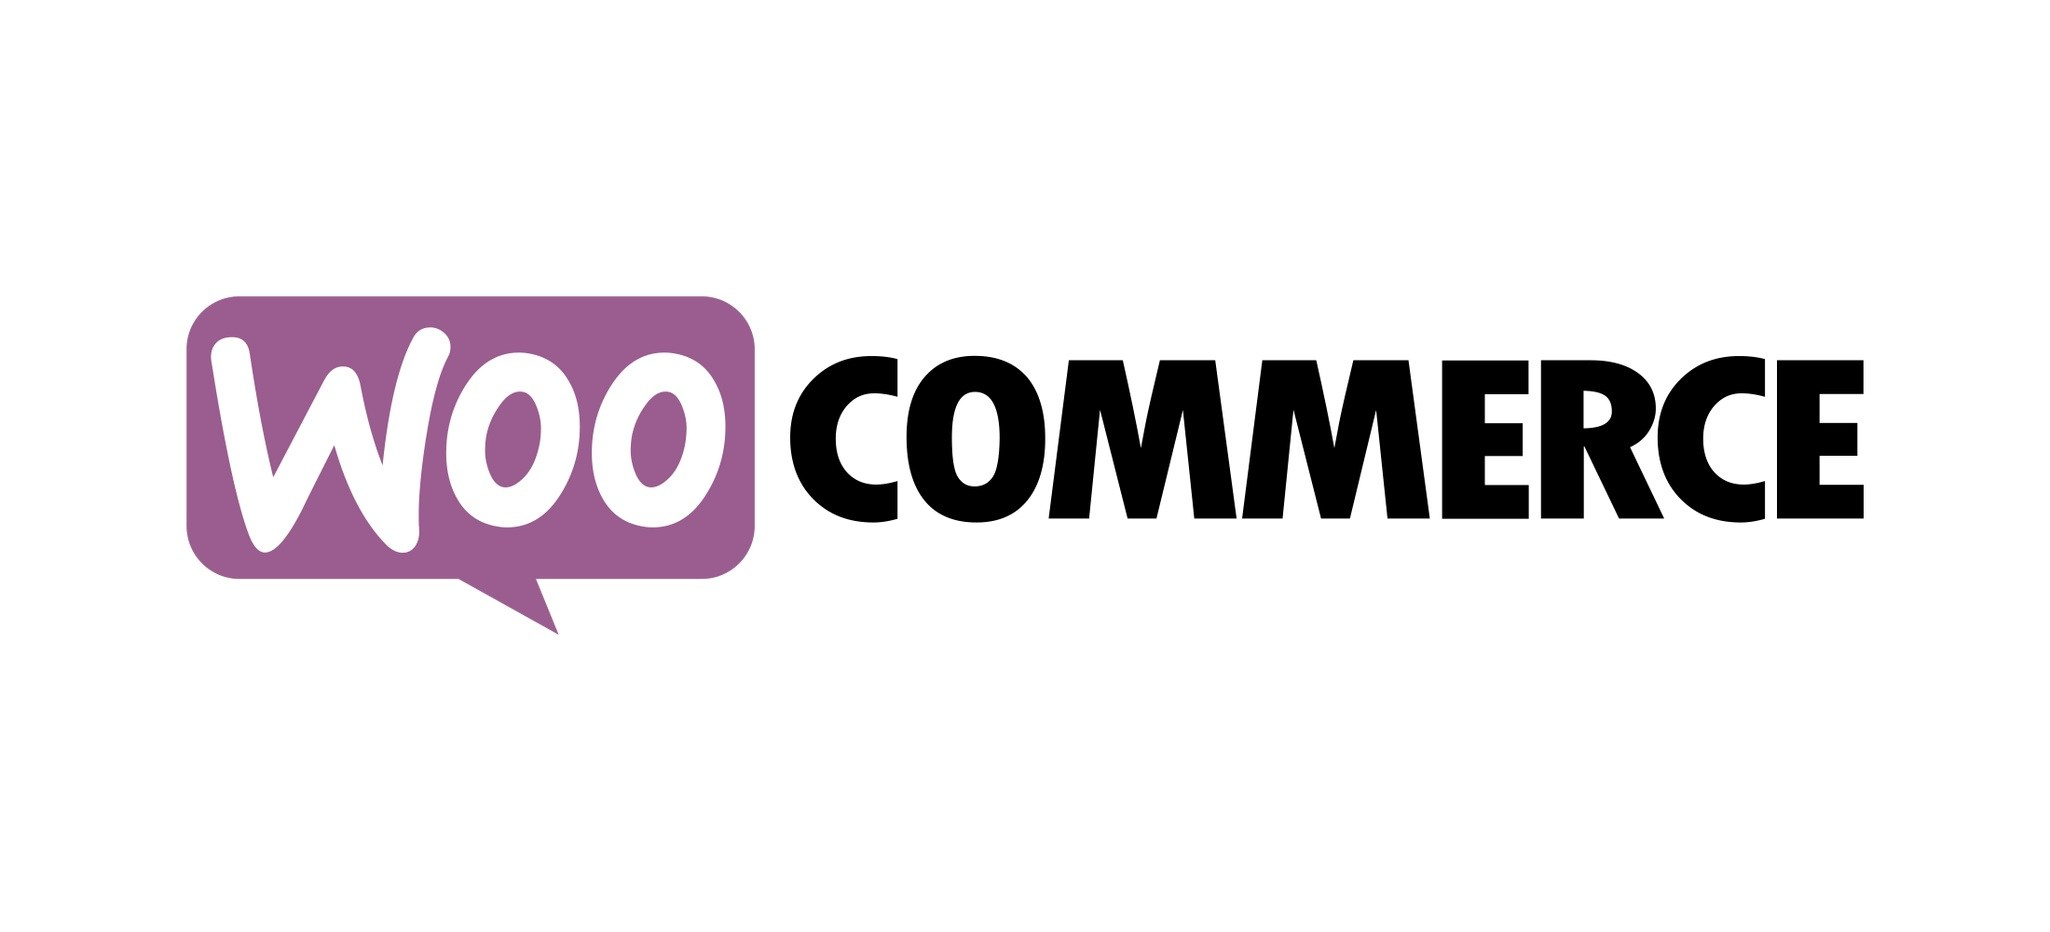 Image result for woocommerce logo